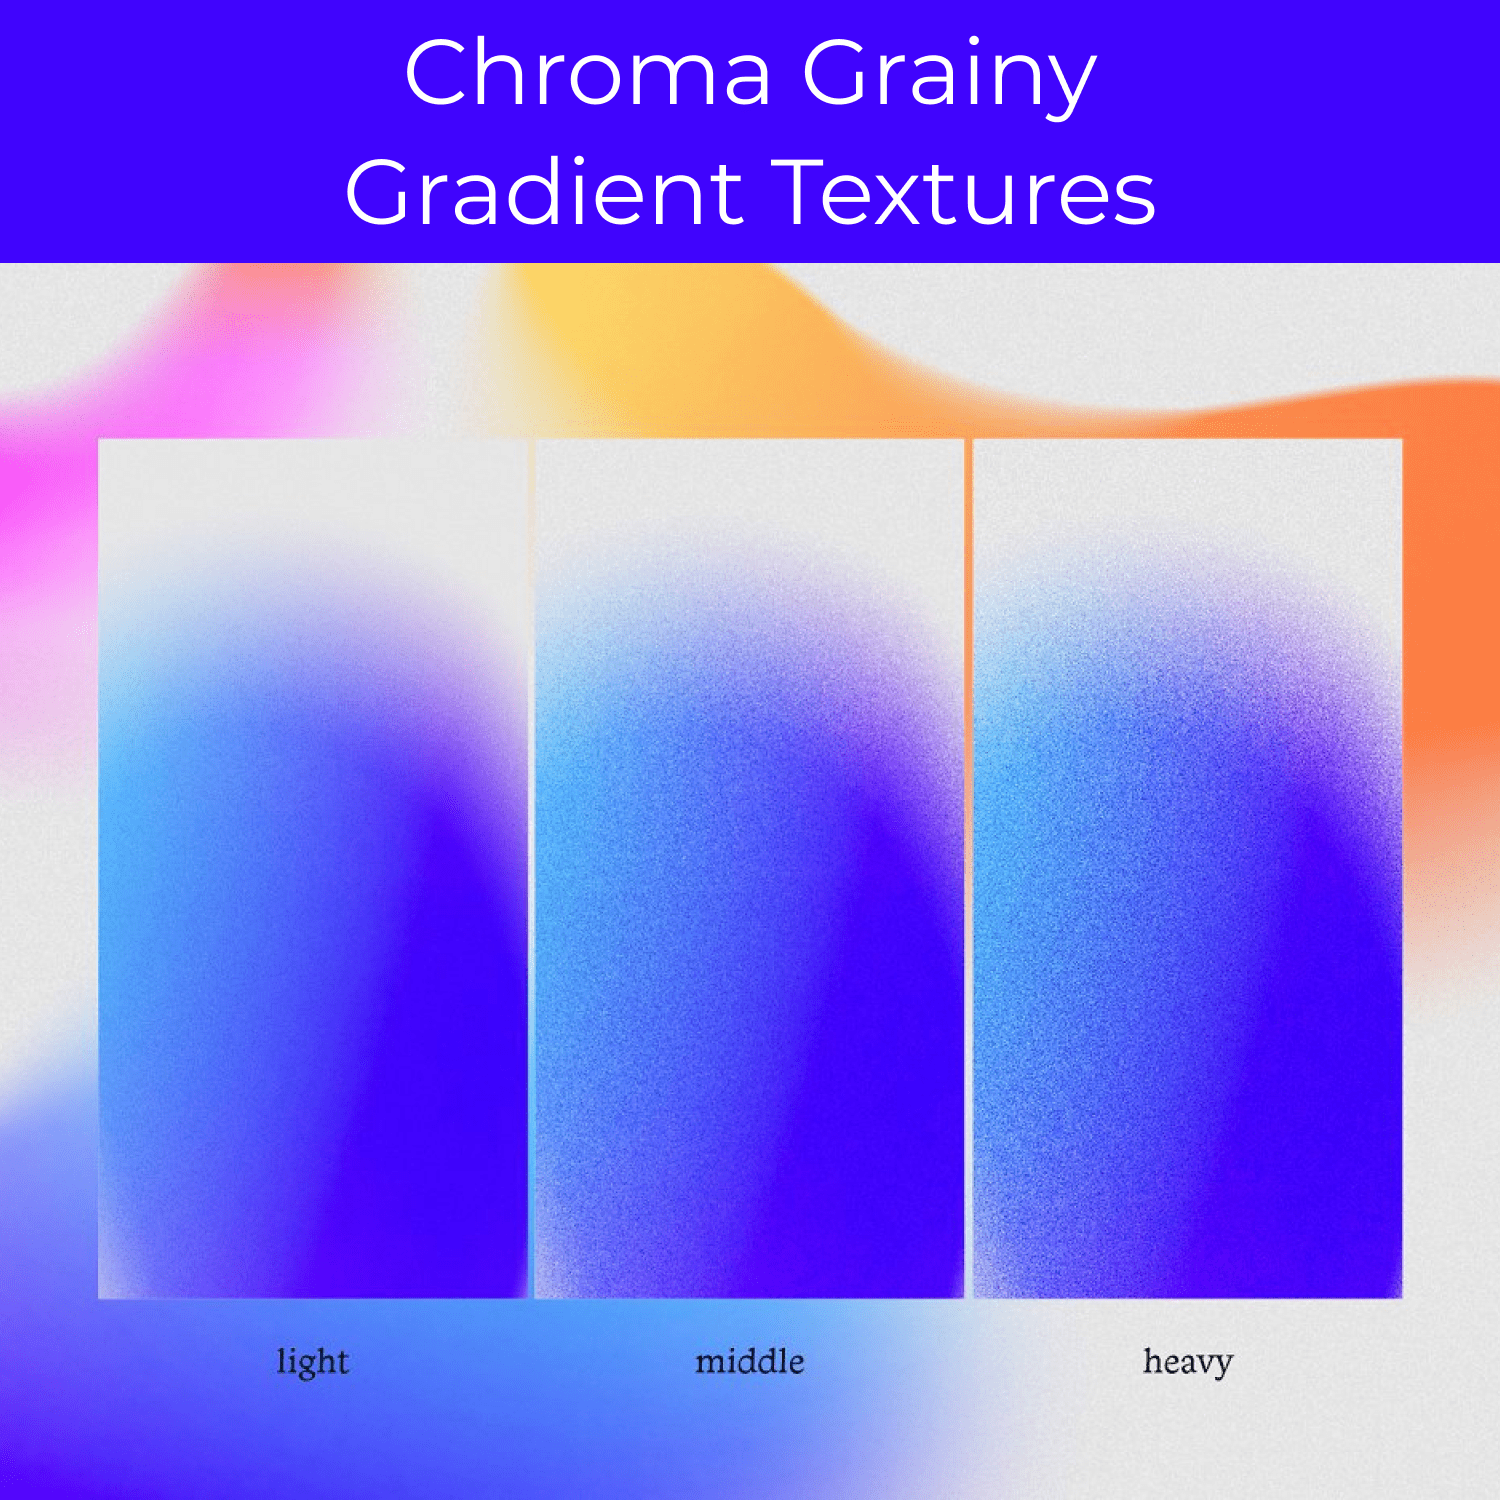 Chroma Grainy Gradient Textures cover.